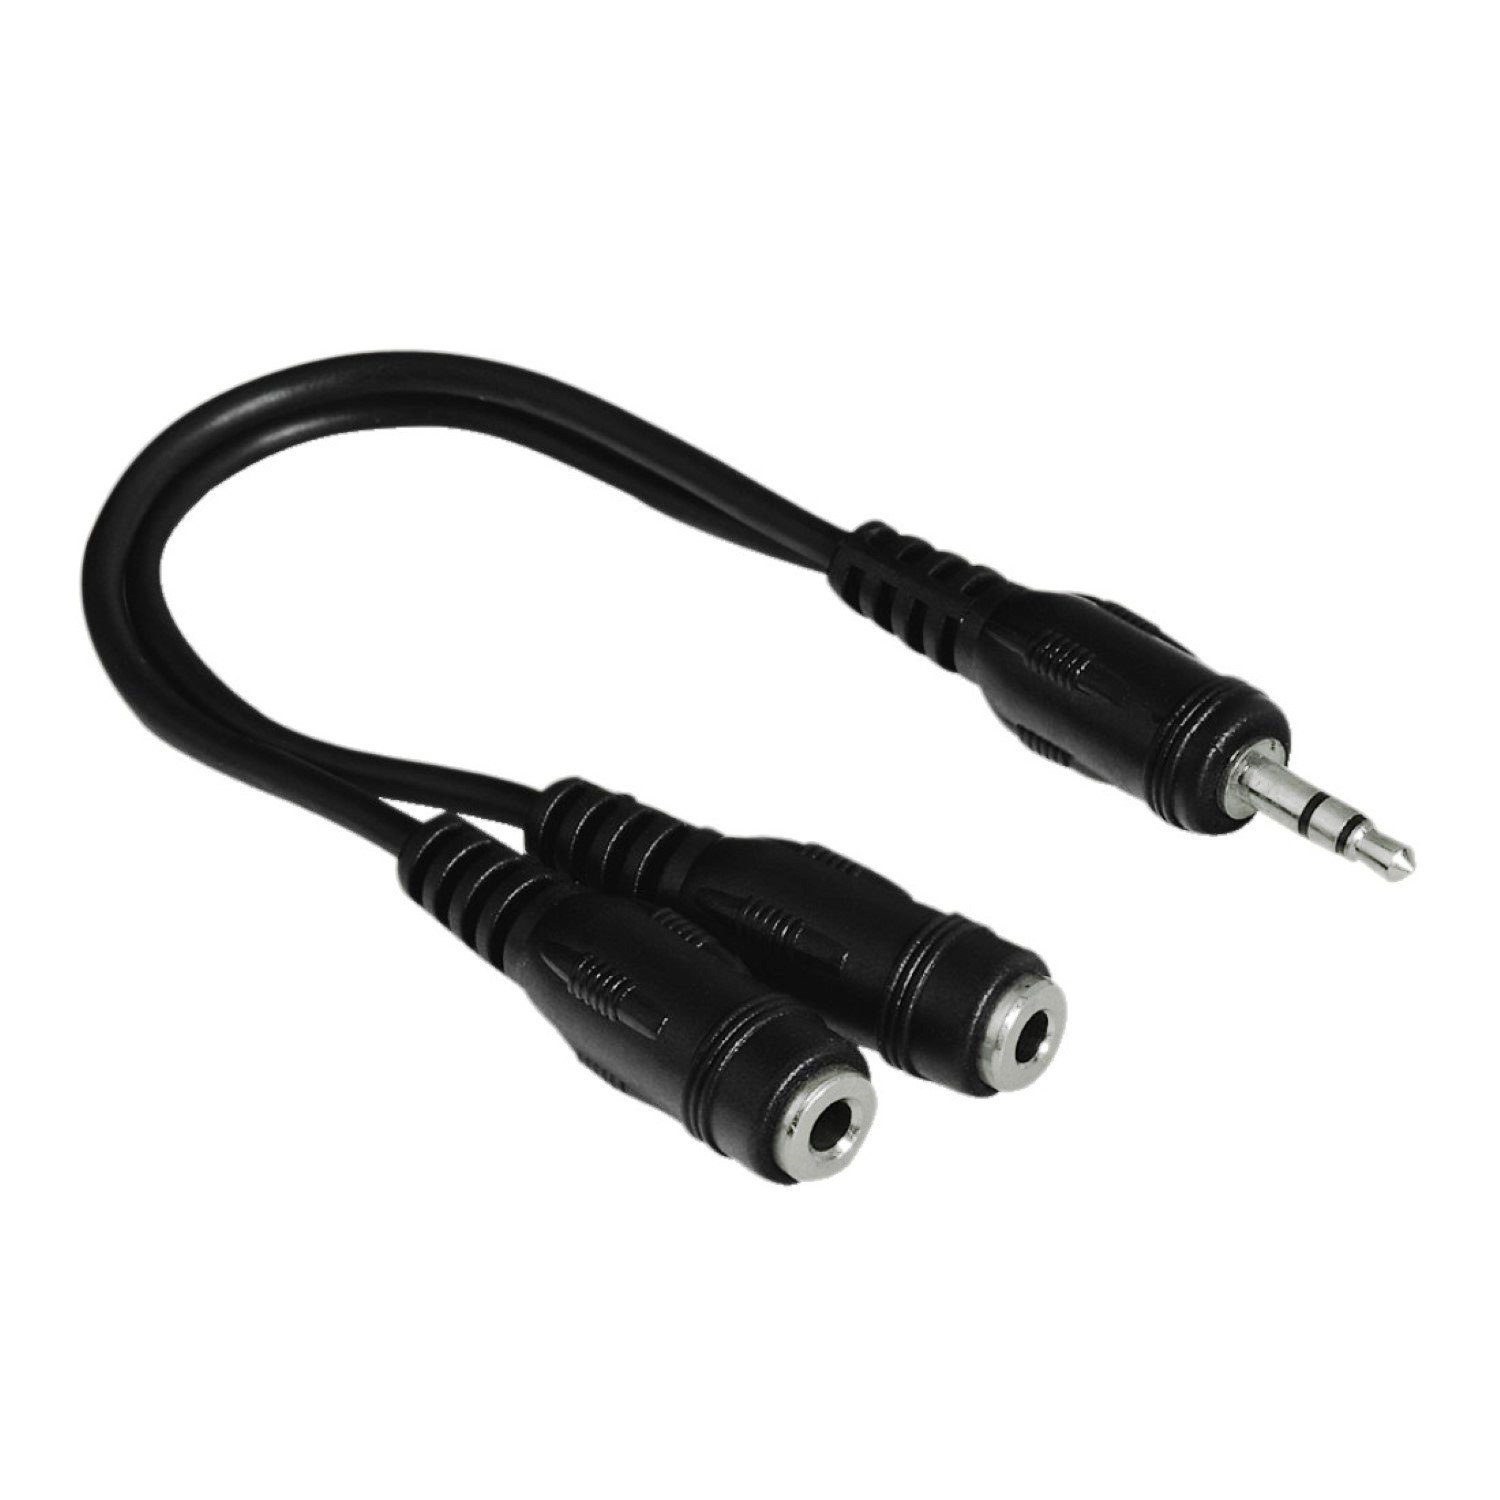 Hama Klinke-Adapter PC Y Splitter Audio-Kabel, 3,5-mm-Klinke, 3,5mm Klinke (20 cm), 3,5mm Klinke-Stecker zu 2x 3,5mm Klinken-Kupplung Adapter